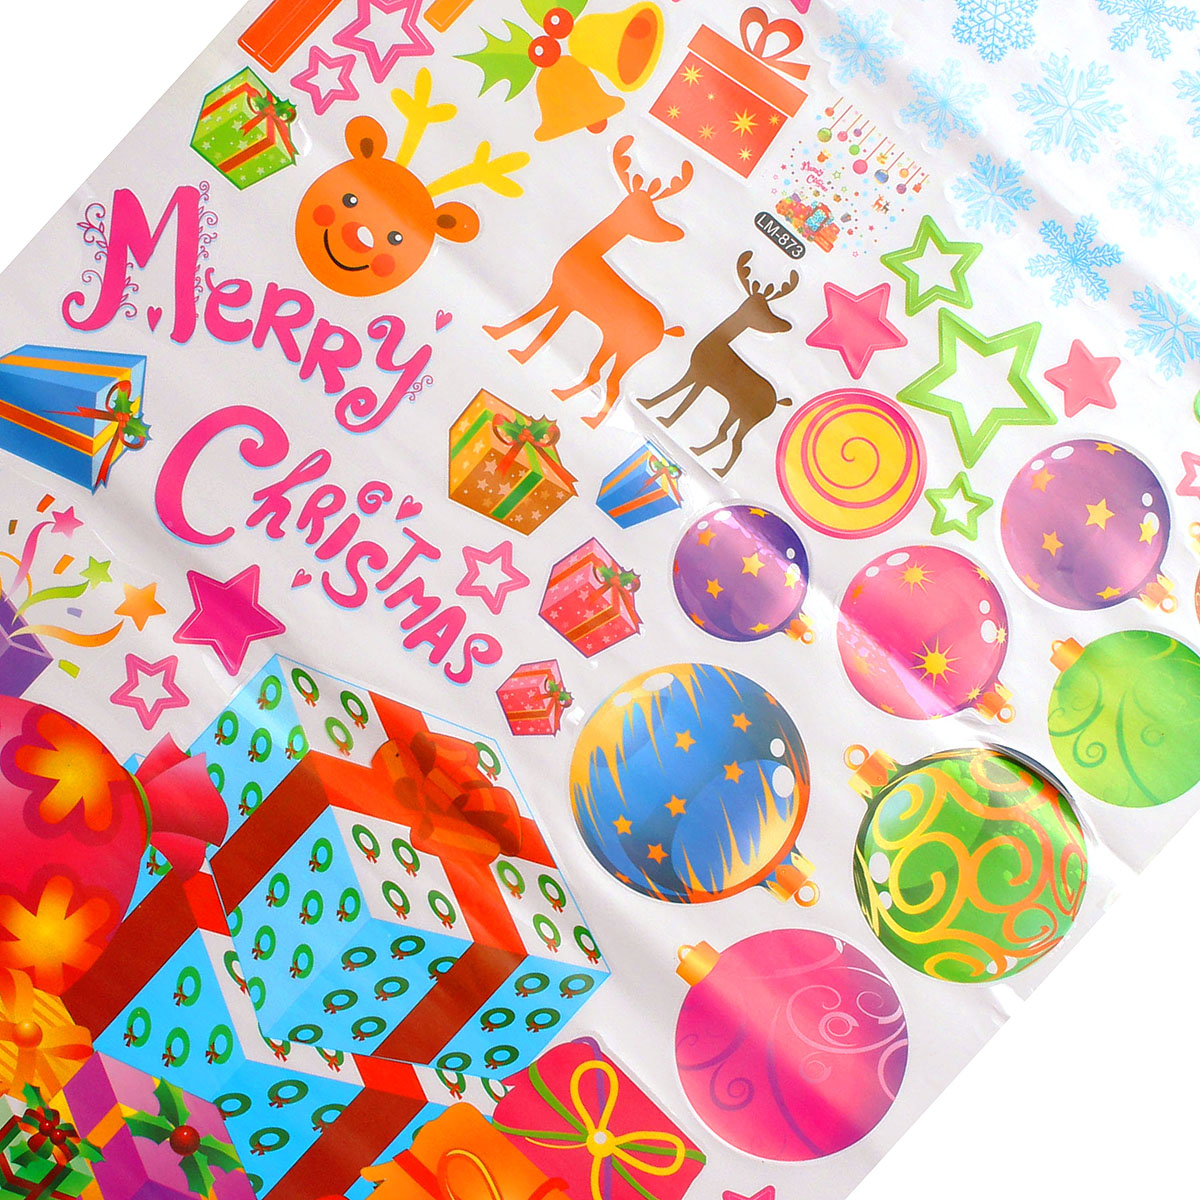 DIY-Sticker-Wall-Decor-Merry-Christmas-Santa-Removable-Art-Window-Door-Home-Rome-1032670-6